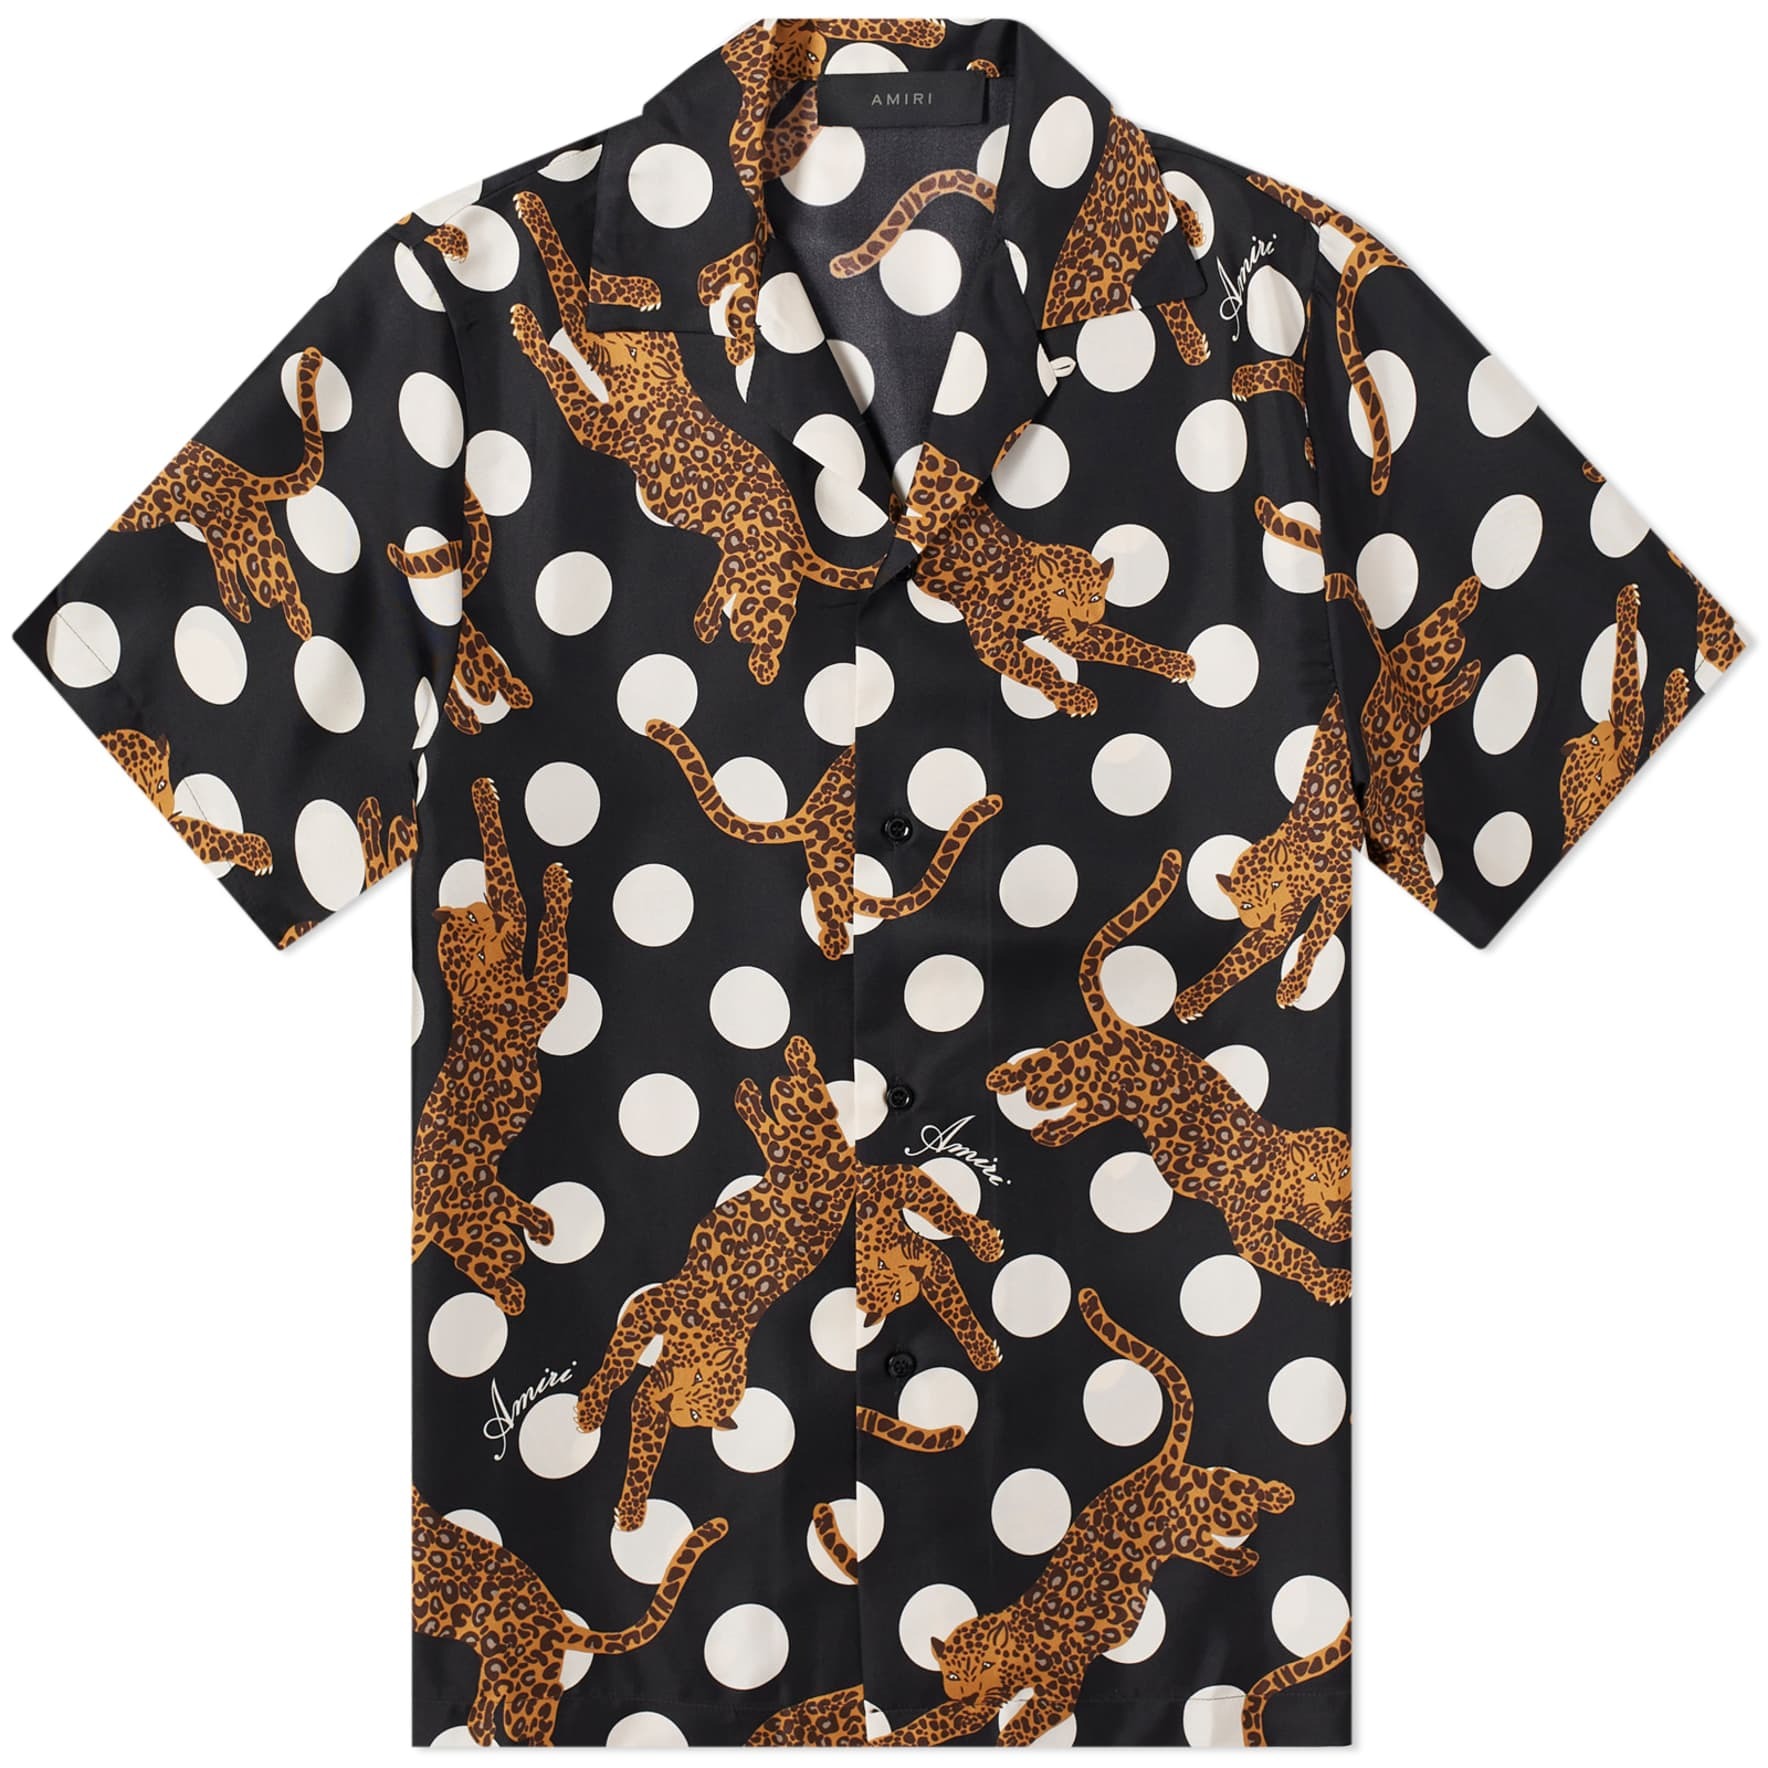 Рубашка Amiri Leopard Polka Short Sleeve Vacation, черный/мультиколор mike amiri amiri wes lang